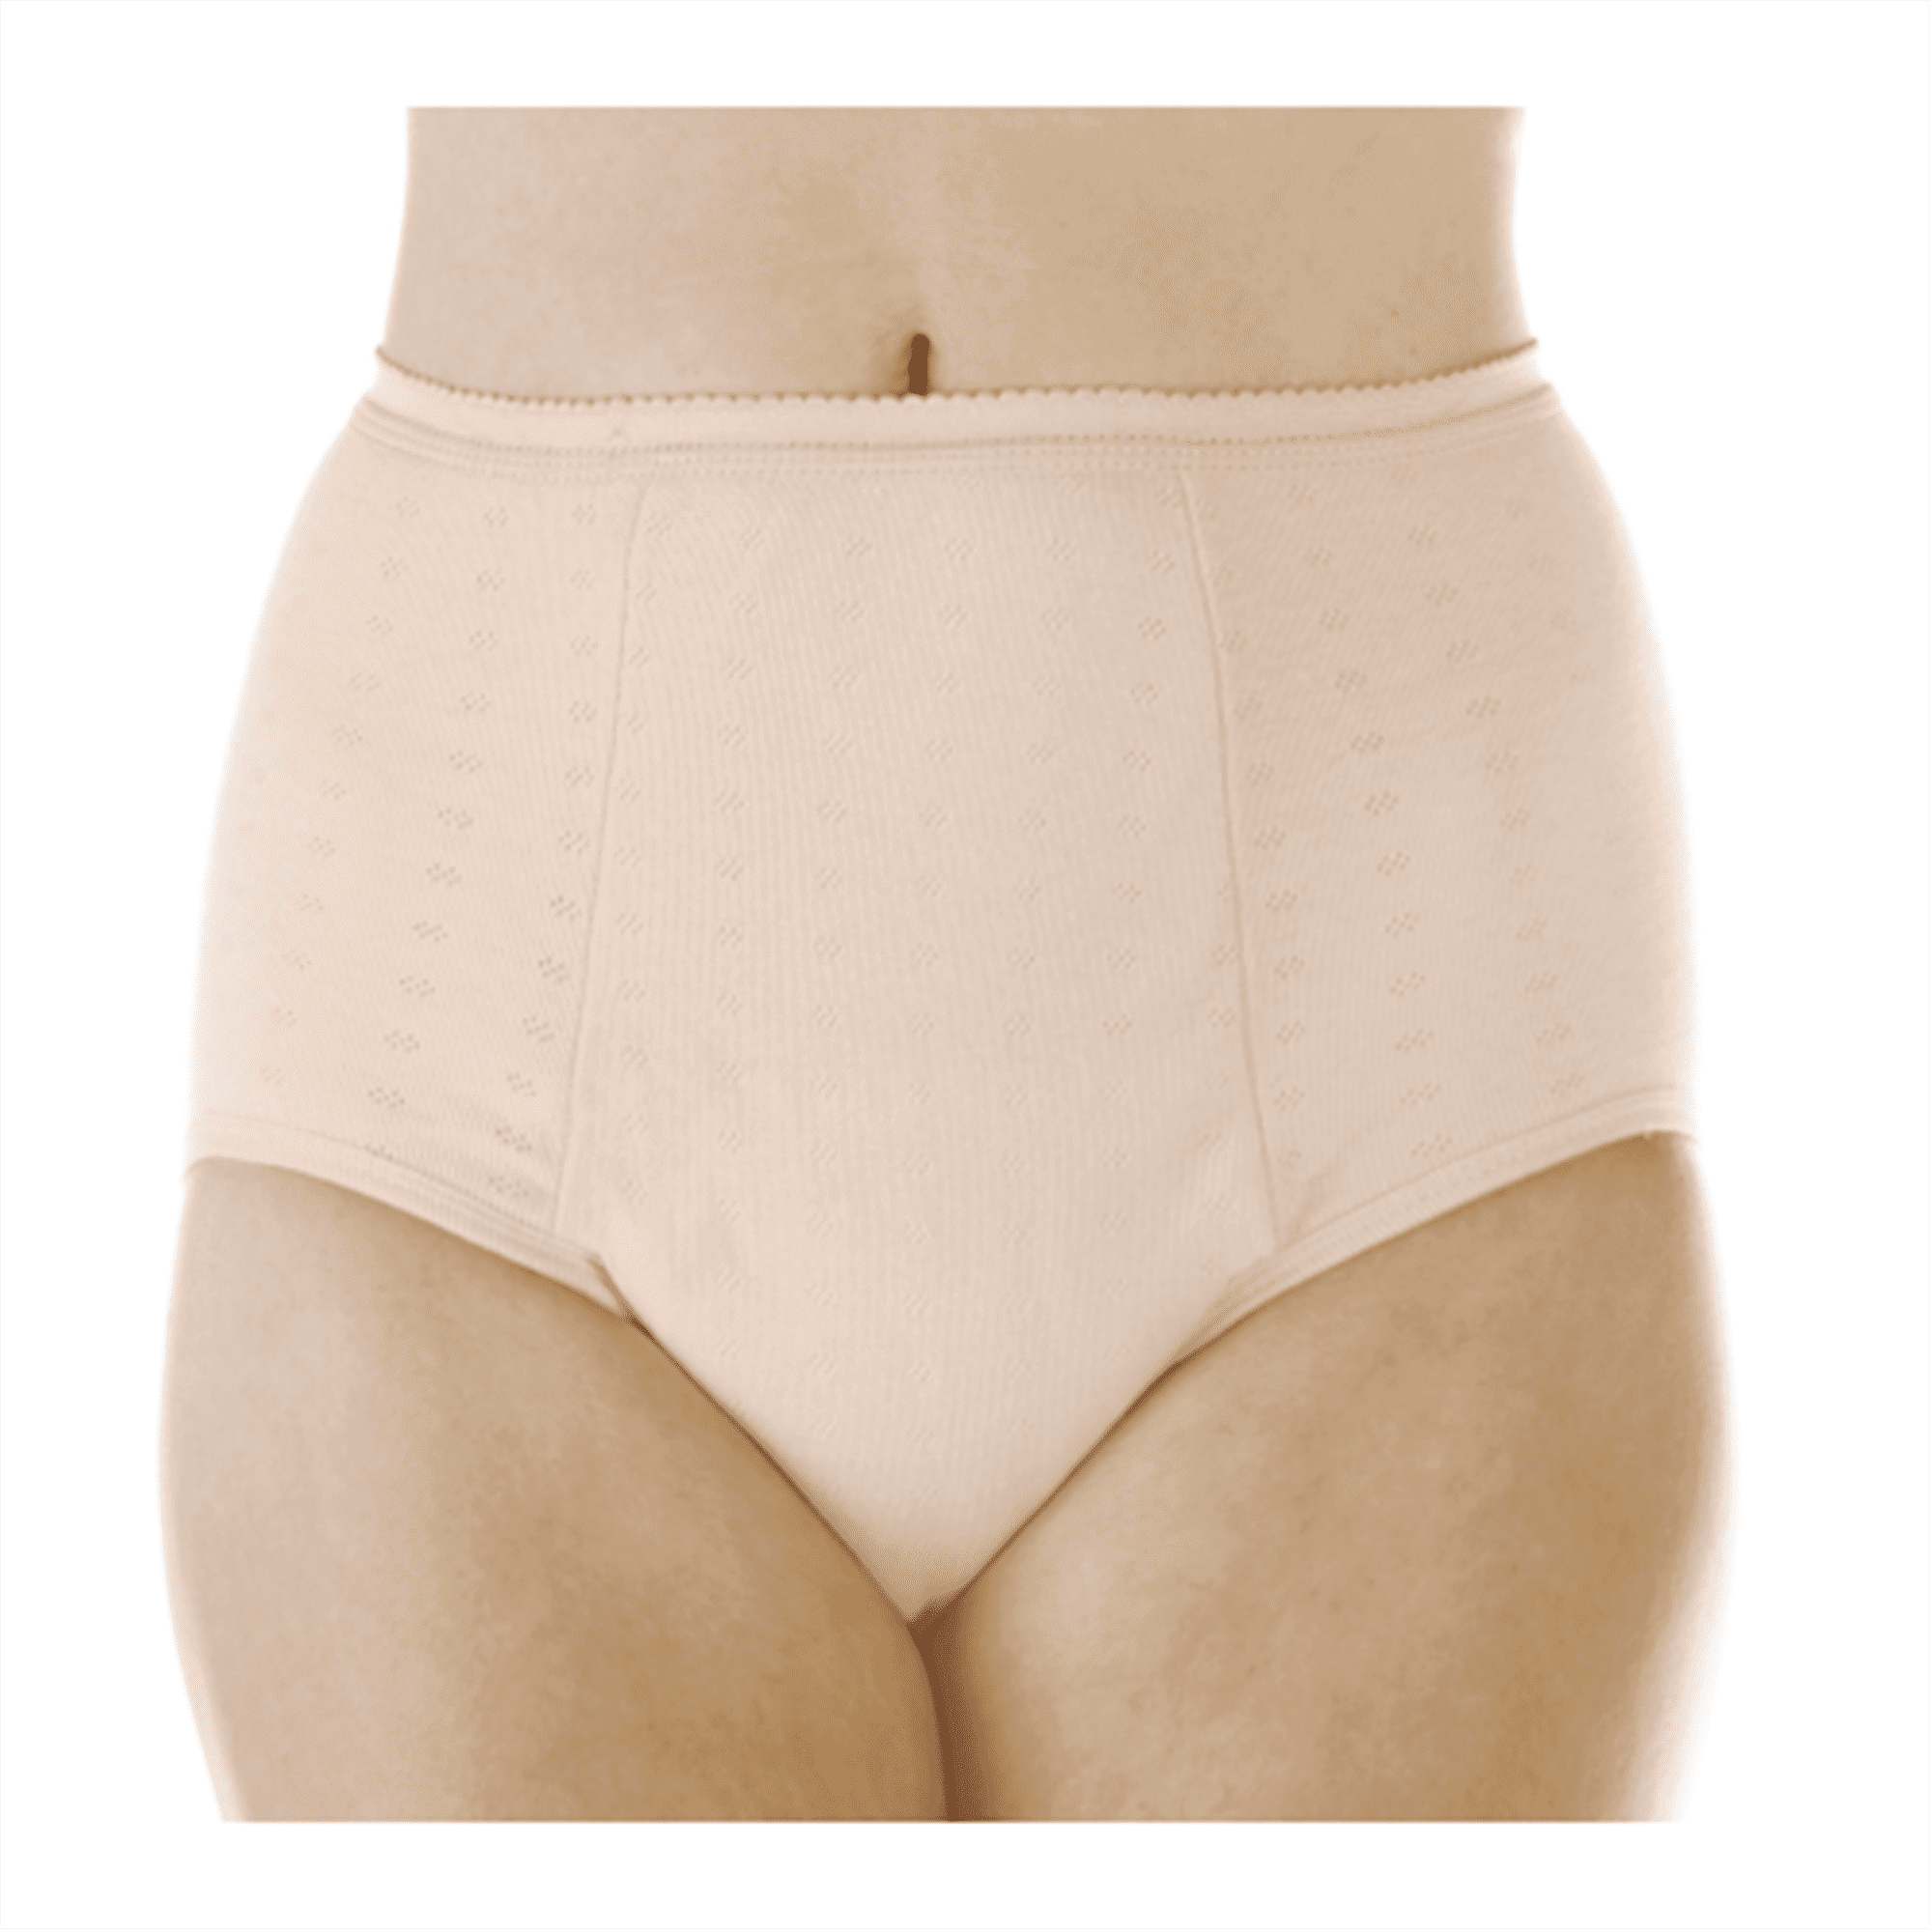 Women's Super Incontinence Panties, Full Cut, Maximum Absorbency